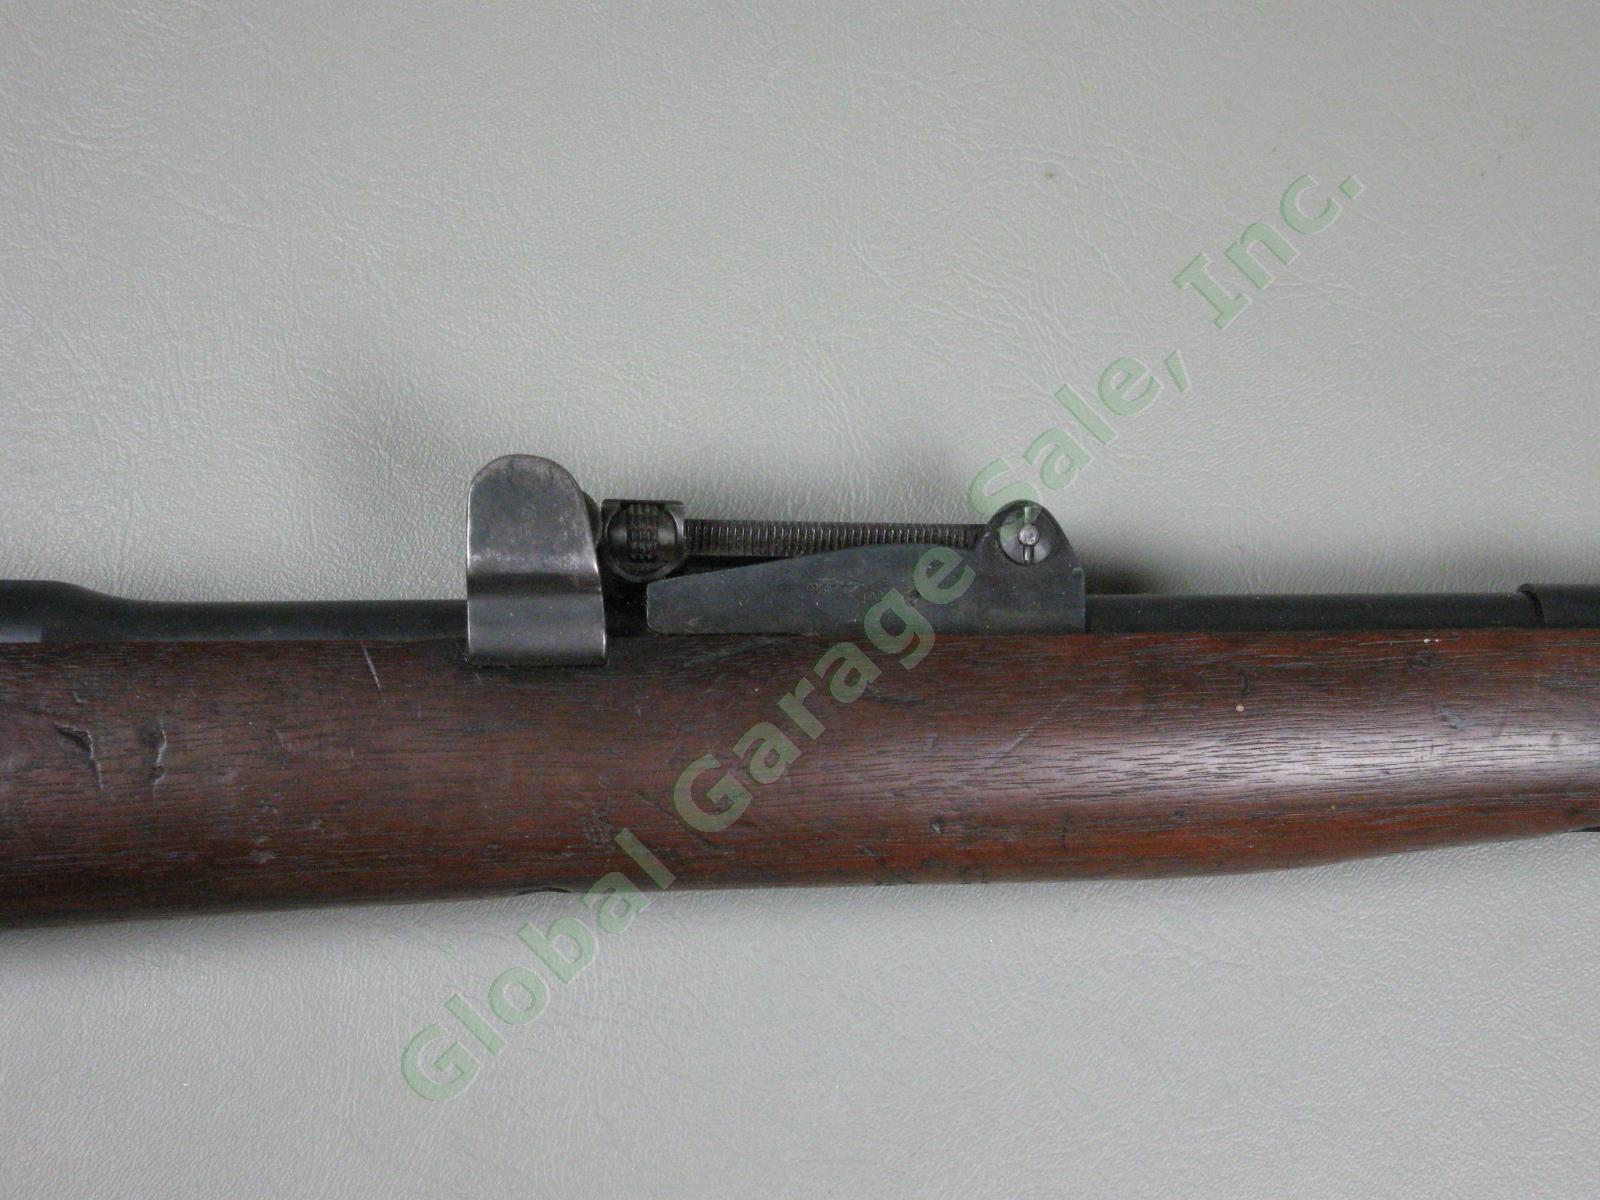 Rare WWI Lee-Enfield British Military Rifle GB 1917 SMLE SHT LE Mk III 3